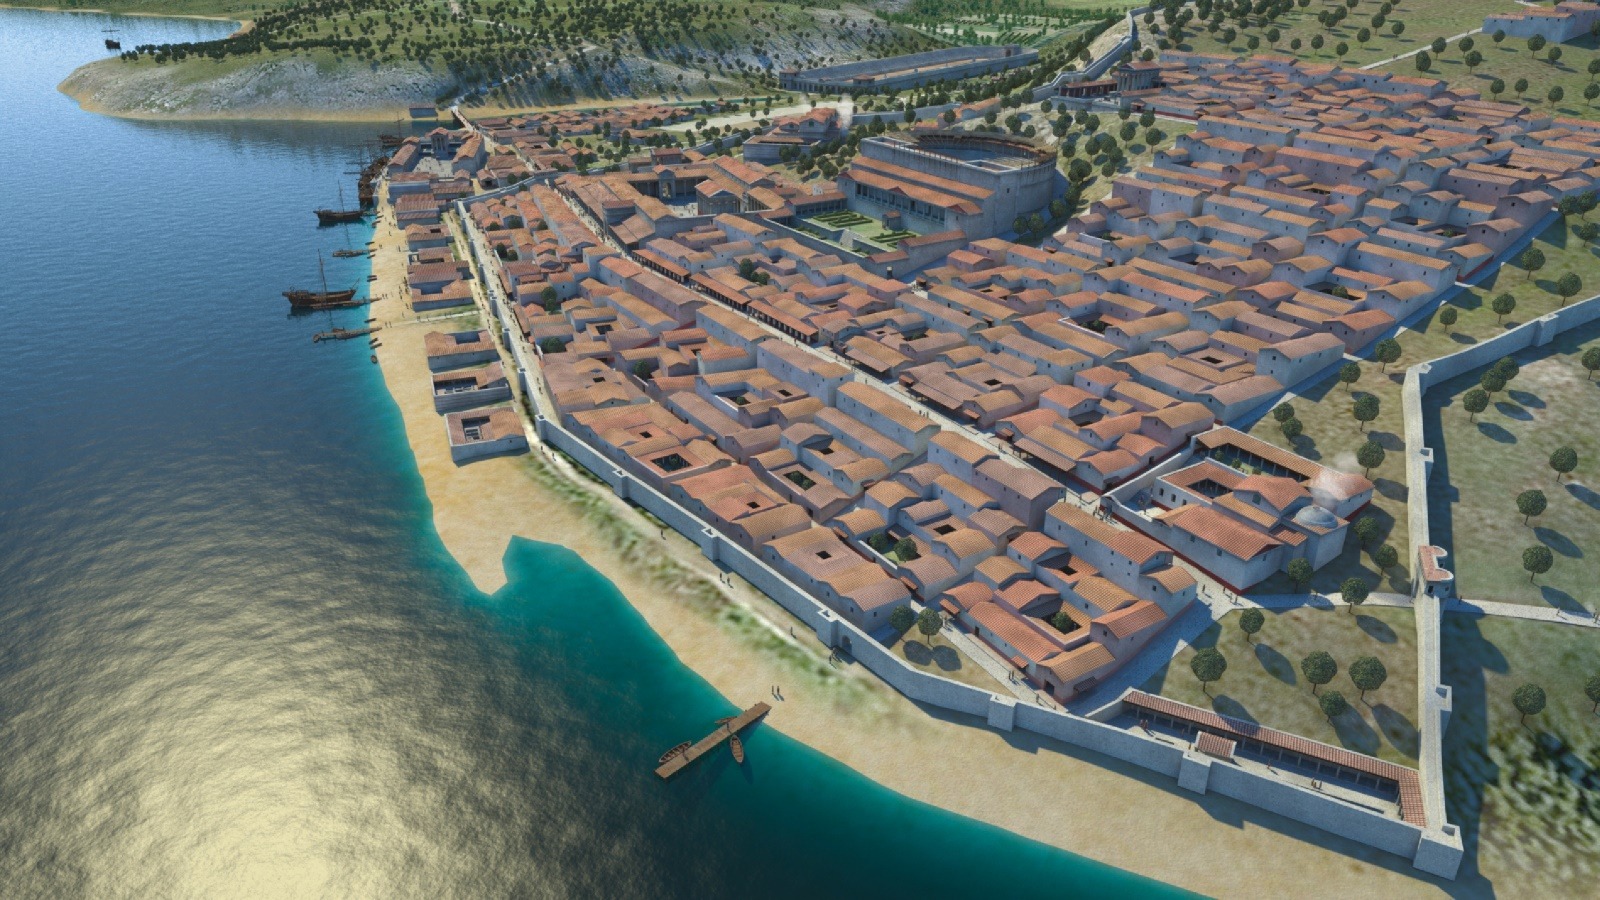 Reconstrução virtual 3D da cidade romana de Olisipo (Lisboa) por César Figueiredo